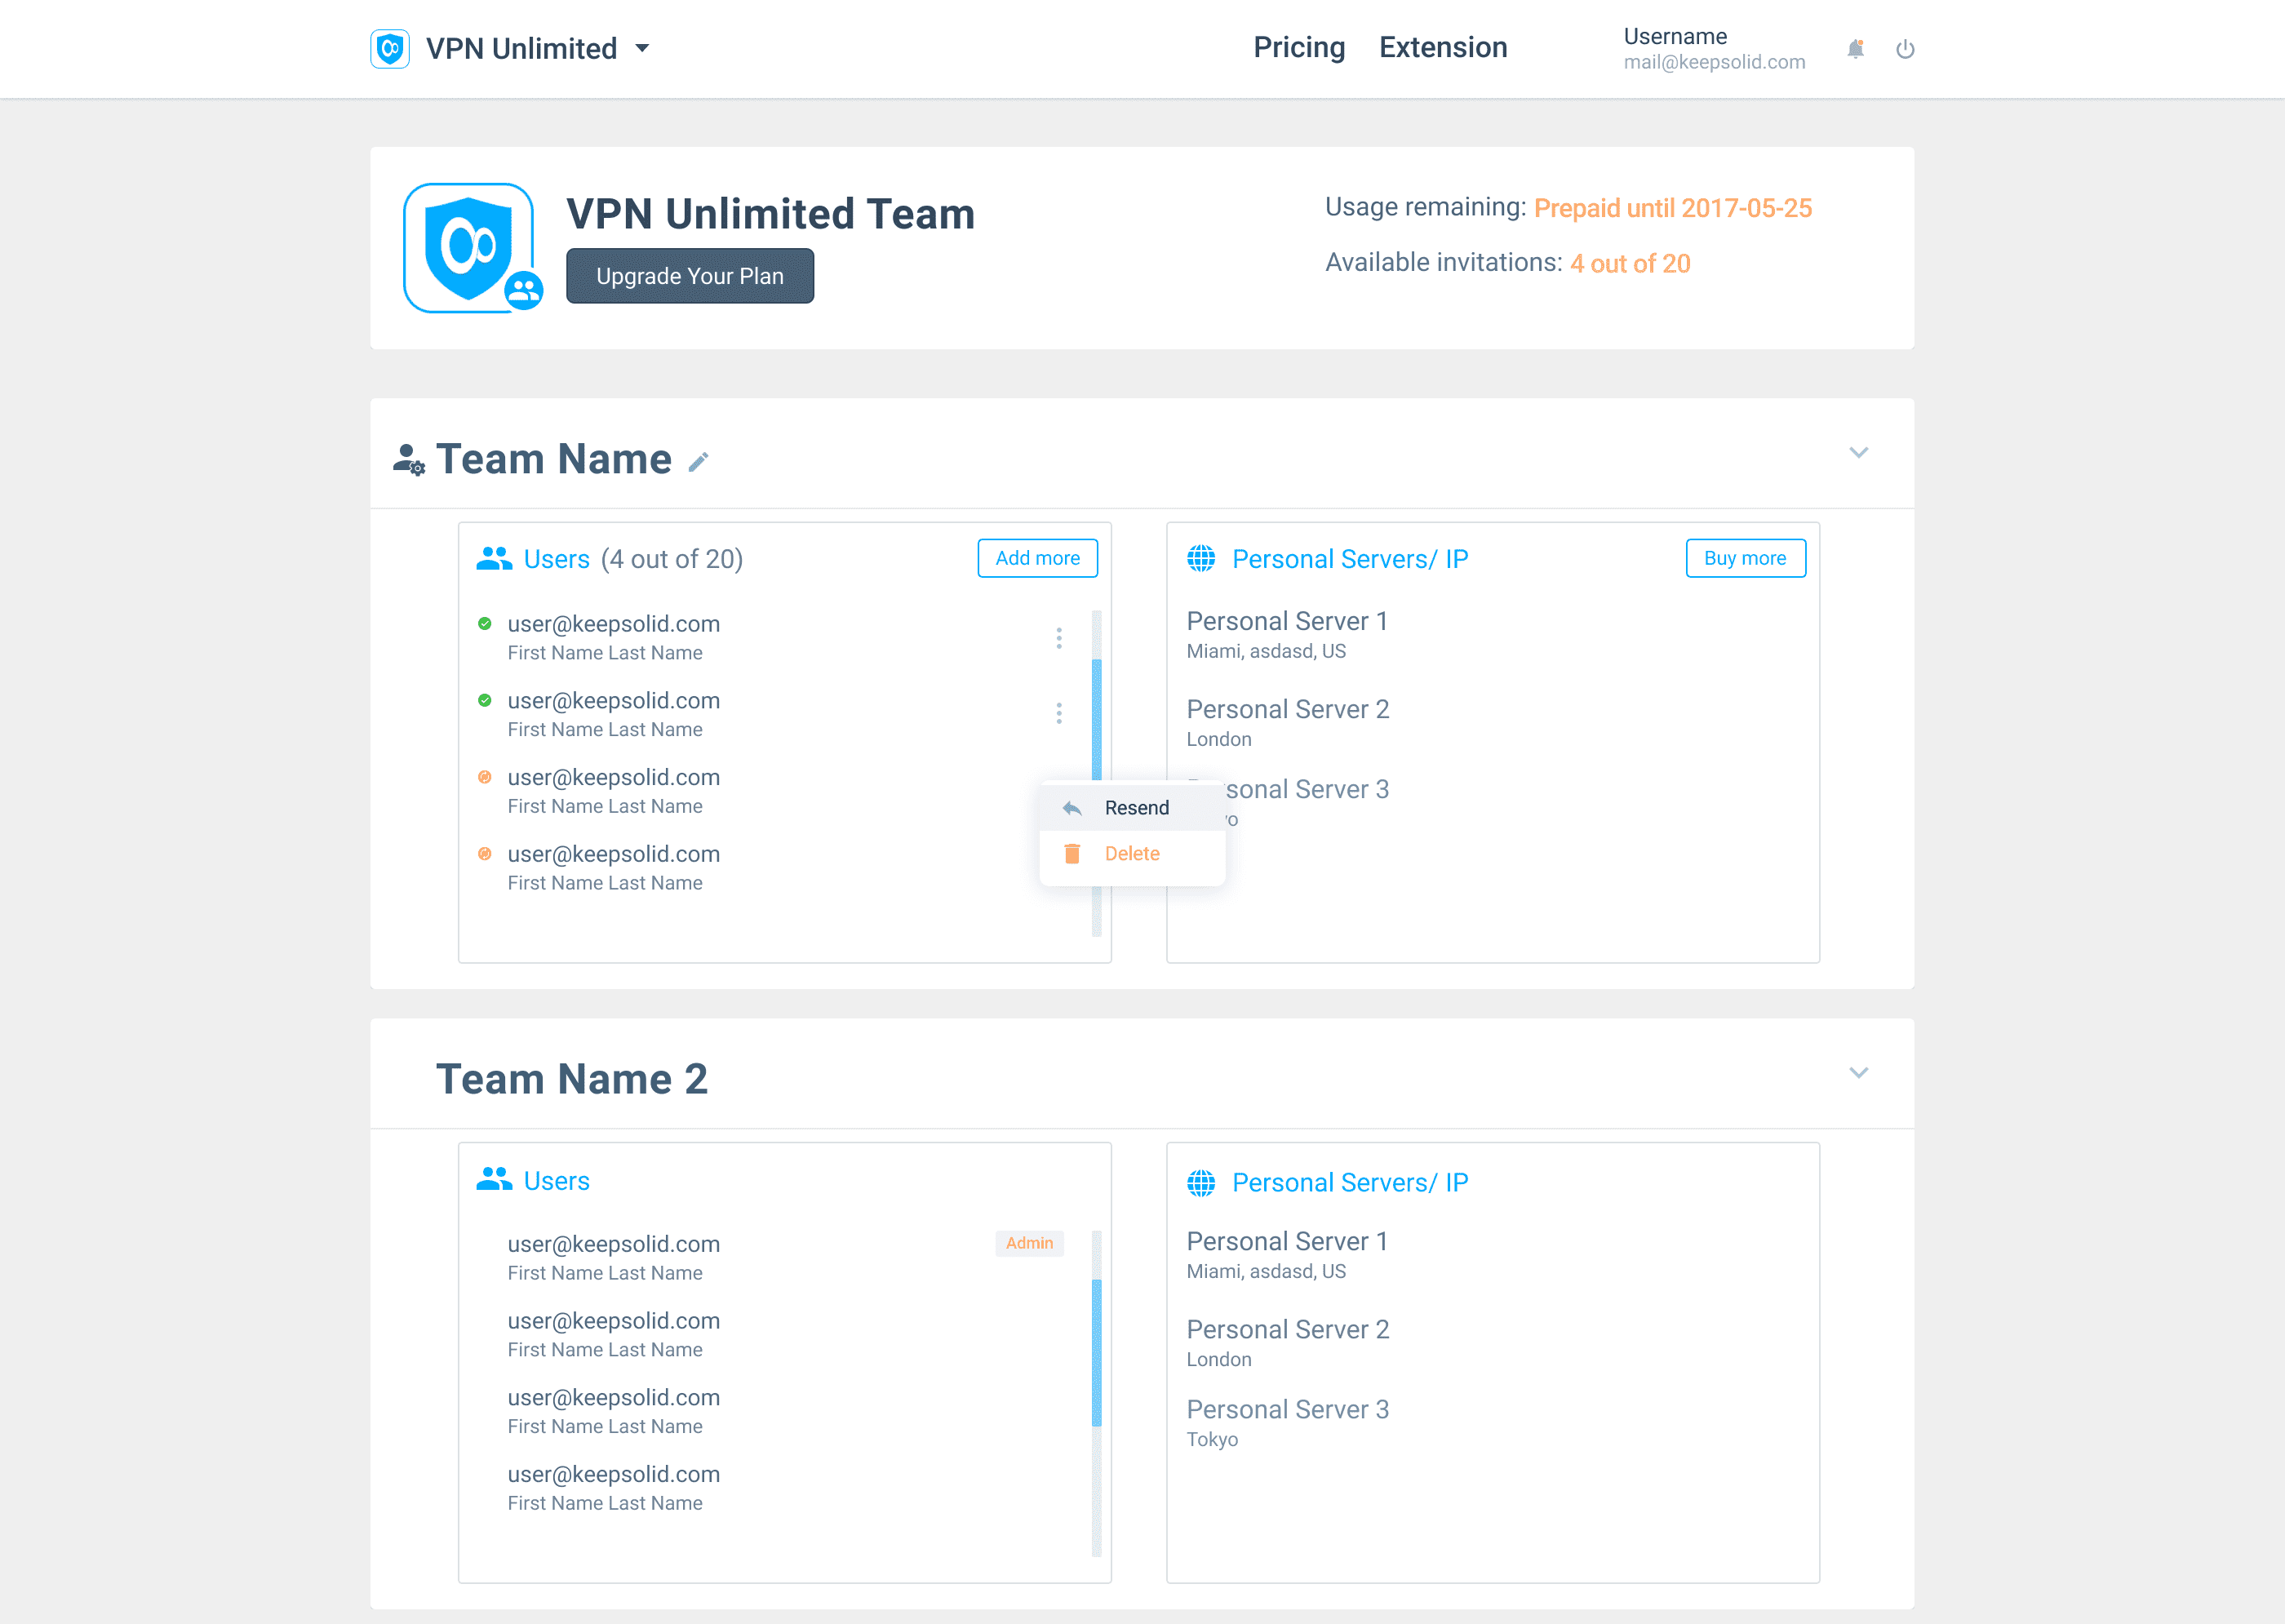 VPN Unlimited Team Example